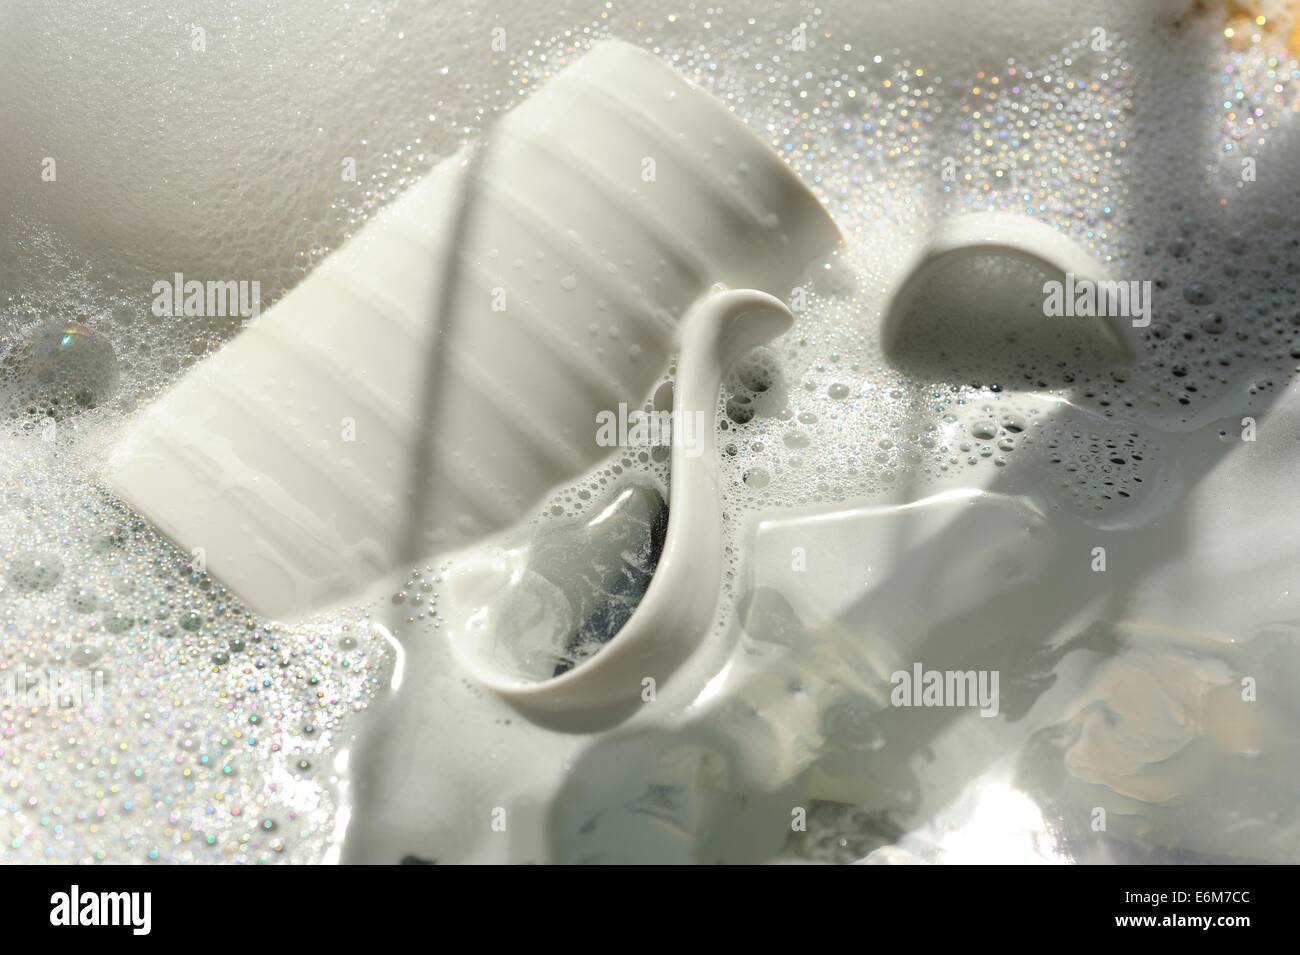 A white ceramic mug soaking in soap suds Stock Photo